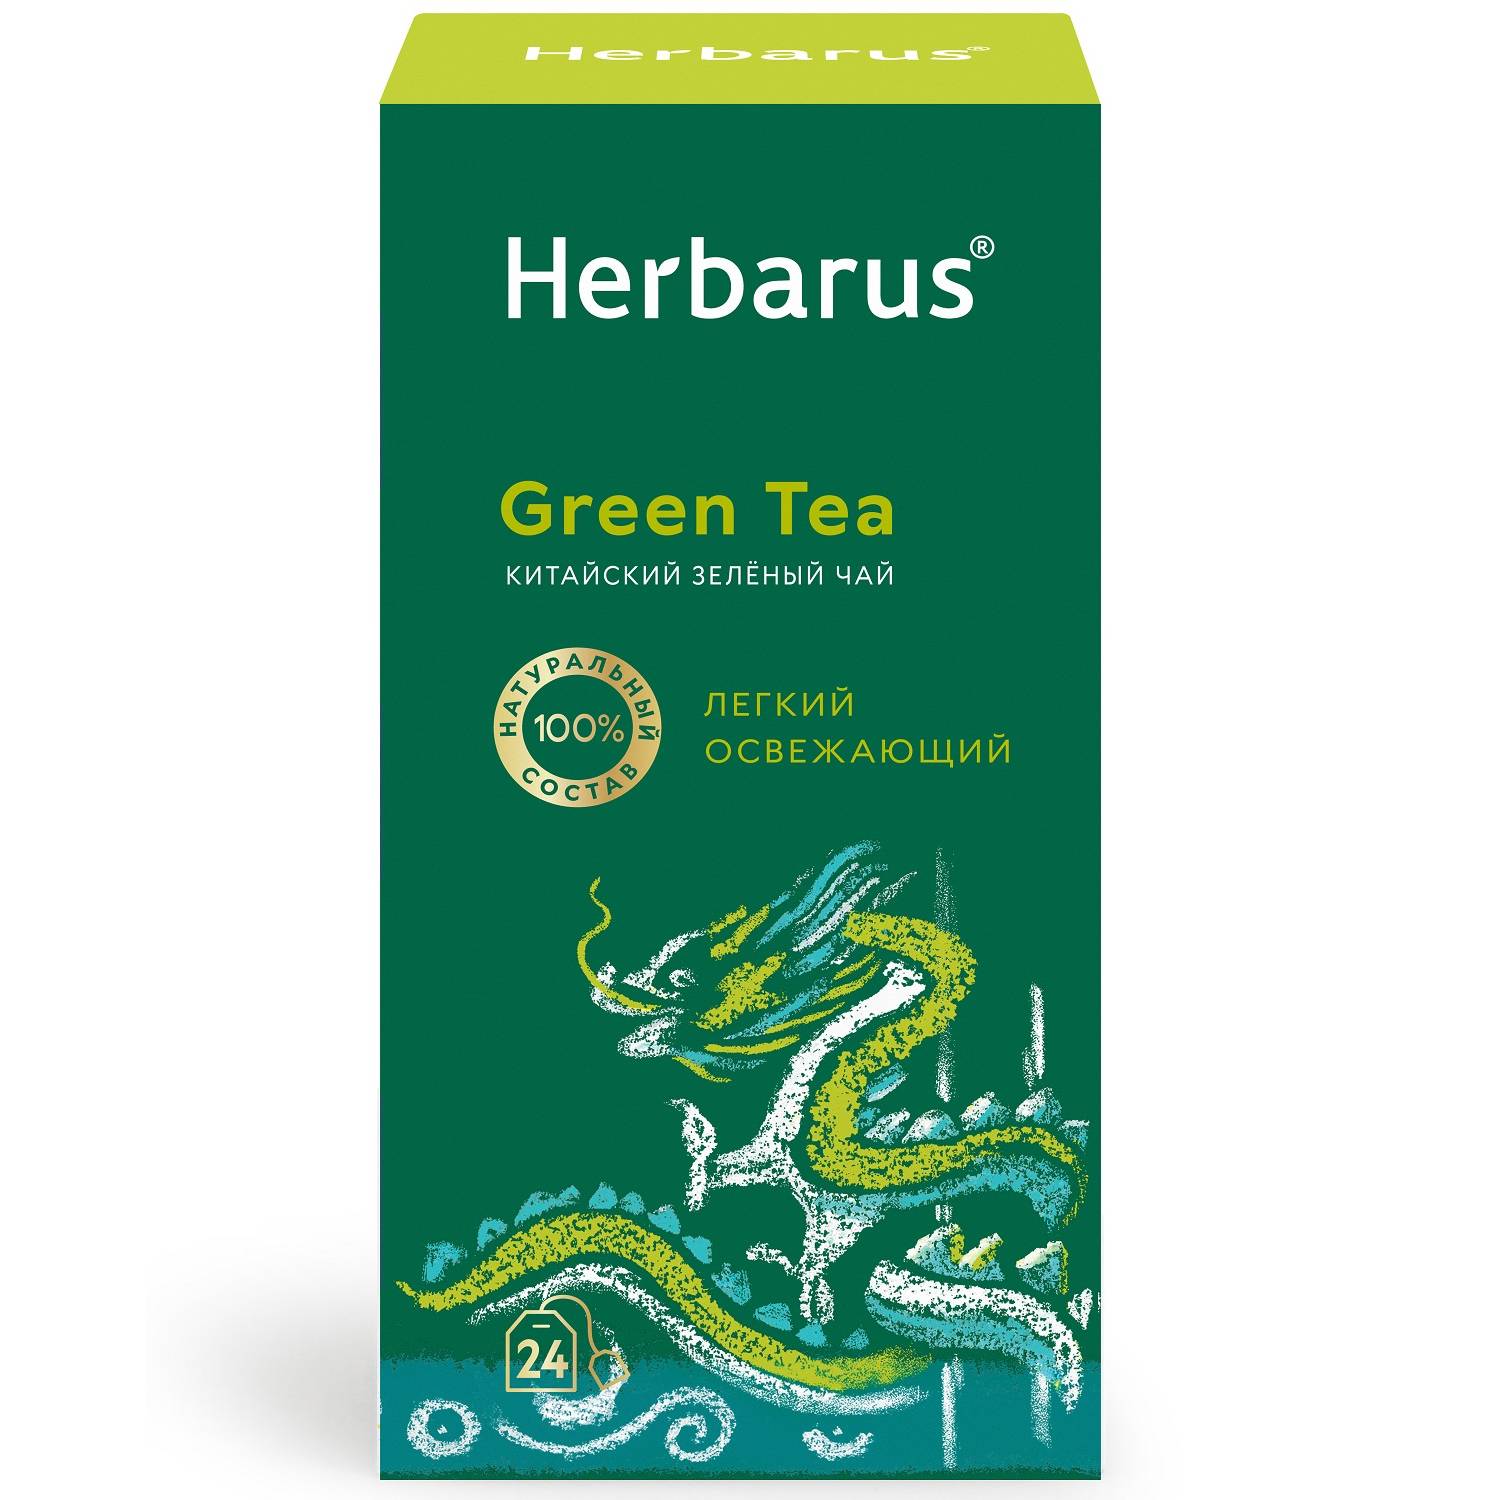 Herbarus Чай зеленый китайский Green Tea, 24 пакетика х 2 г (Herbarus, Классический чай) herbarus чай улун с добавками мятный спокойный 24 шт х 2 г herbarus чай с добавками